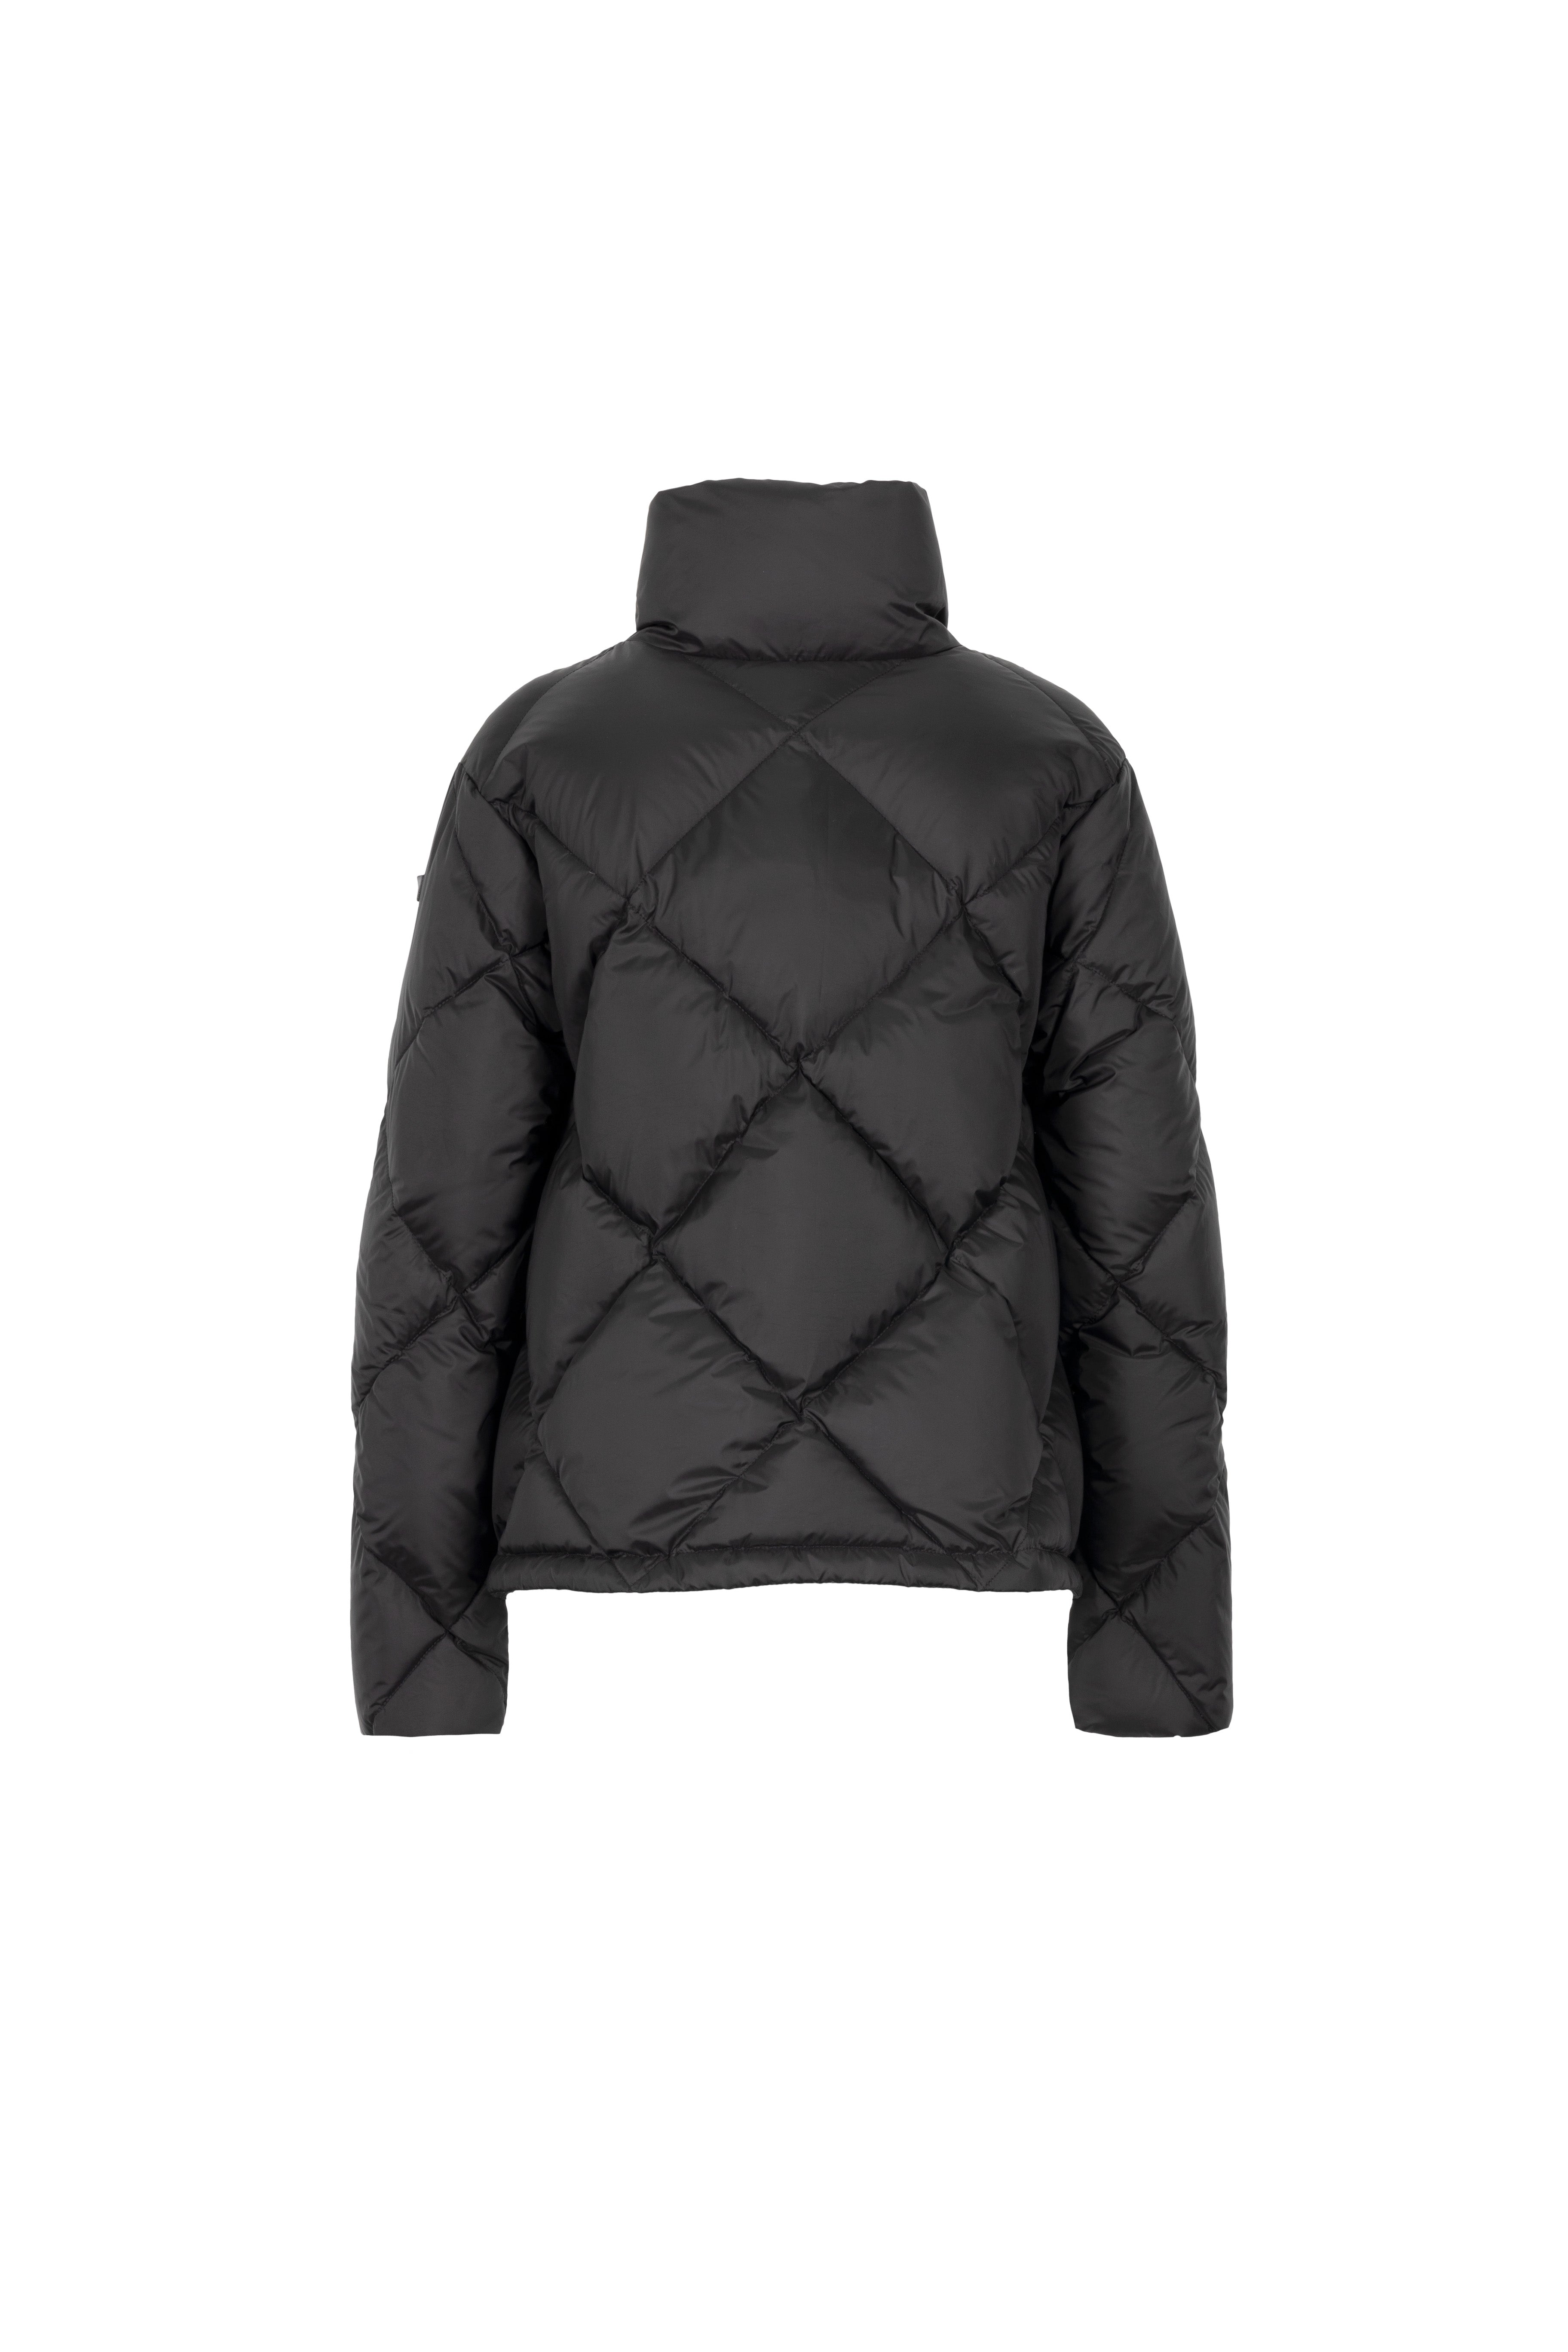 short Diamond quilted Lempelius Jacket in color black